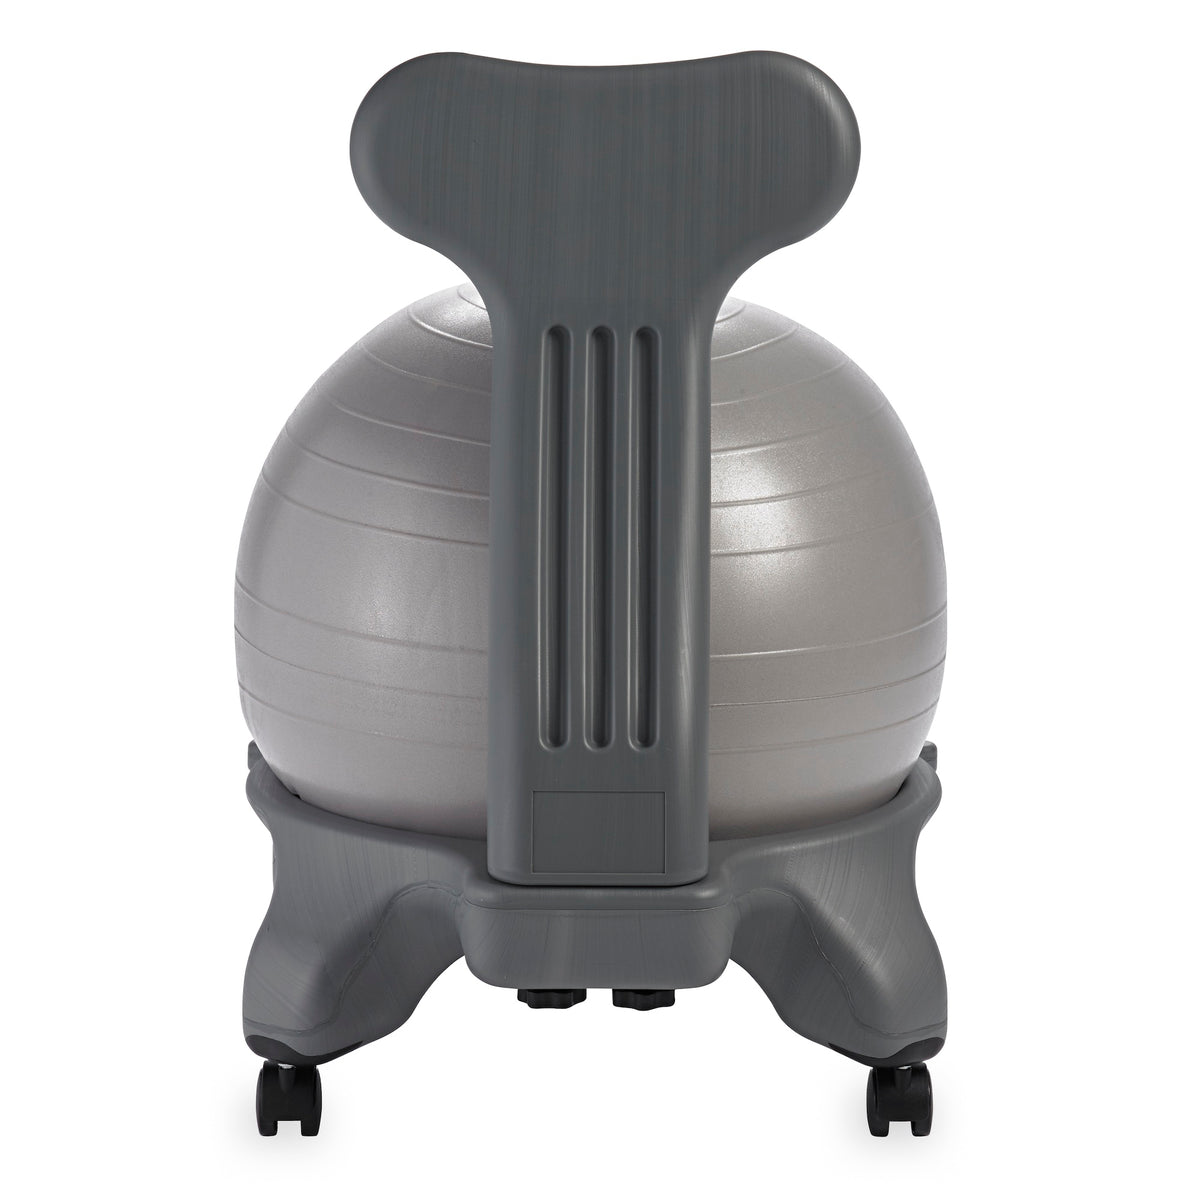 Gaiam Classic Balance Ball® Chair cool grey back